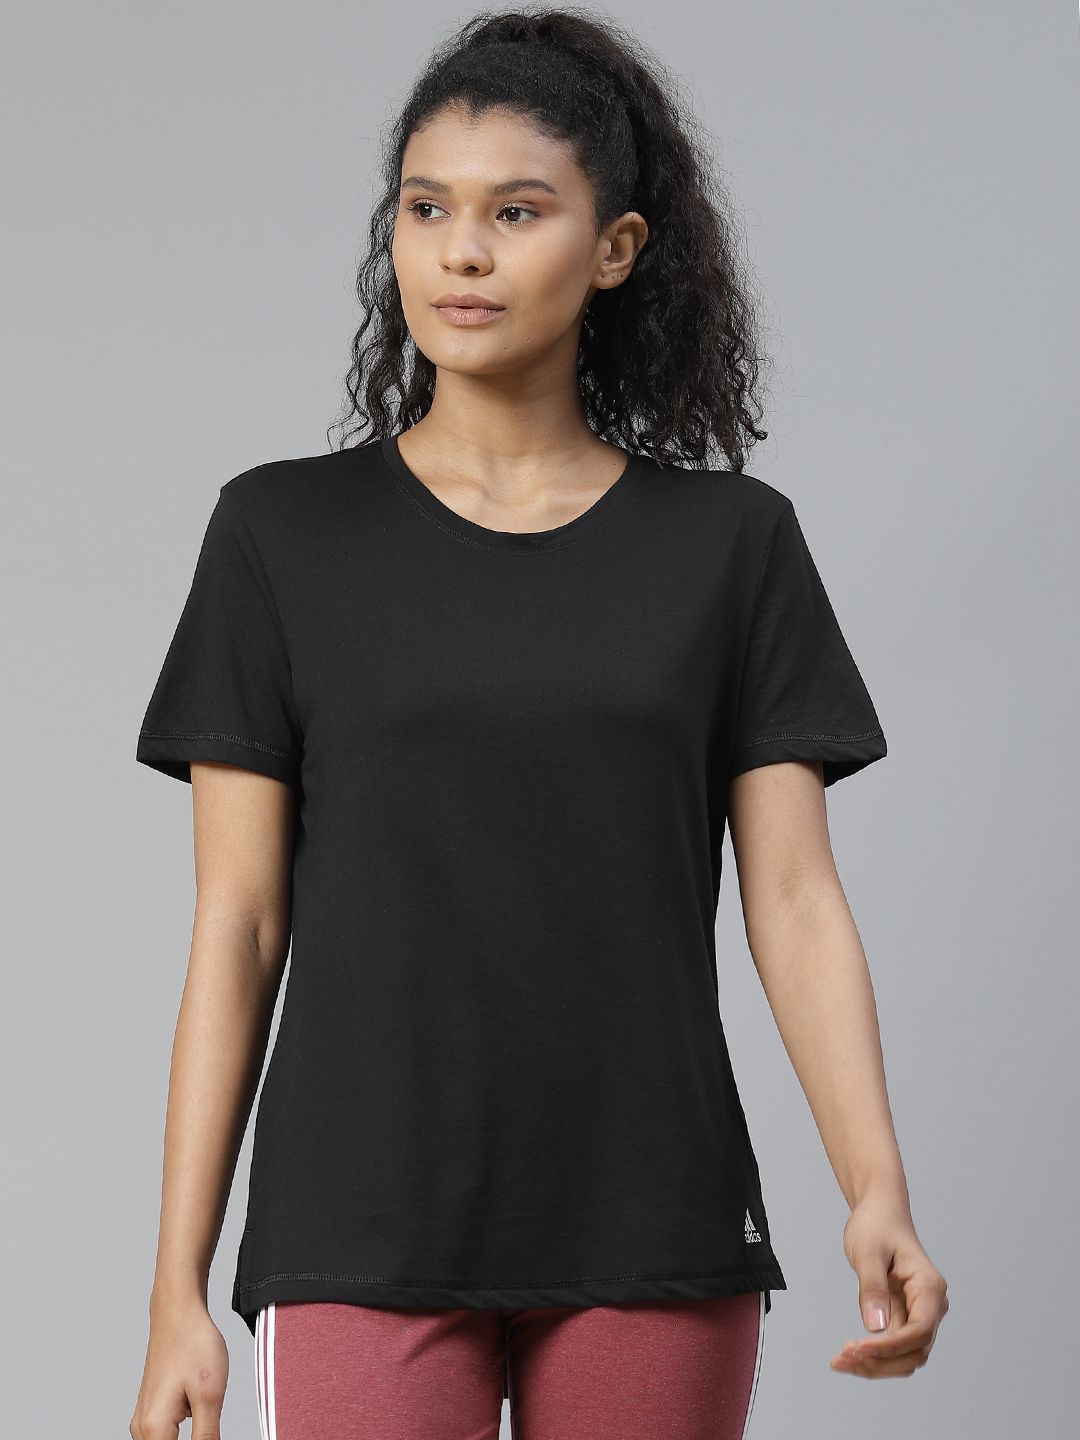 ADIDAS Women Black Prime Solid Round Neck T-shirt Price in India